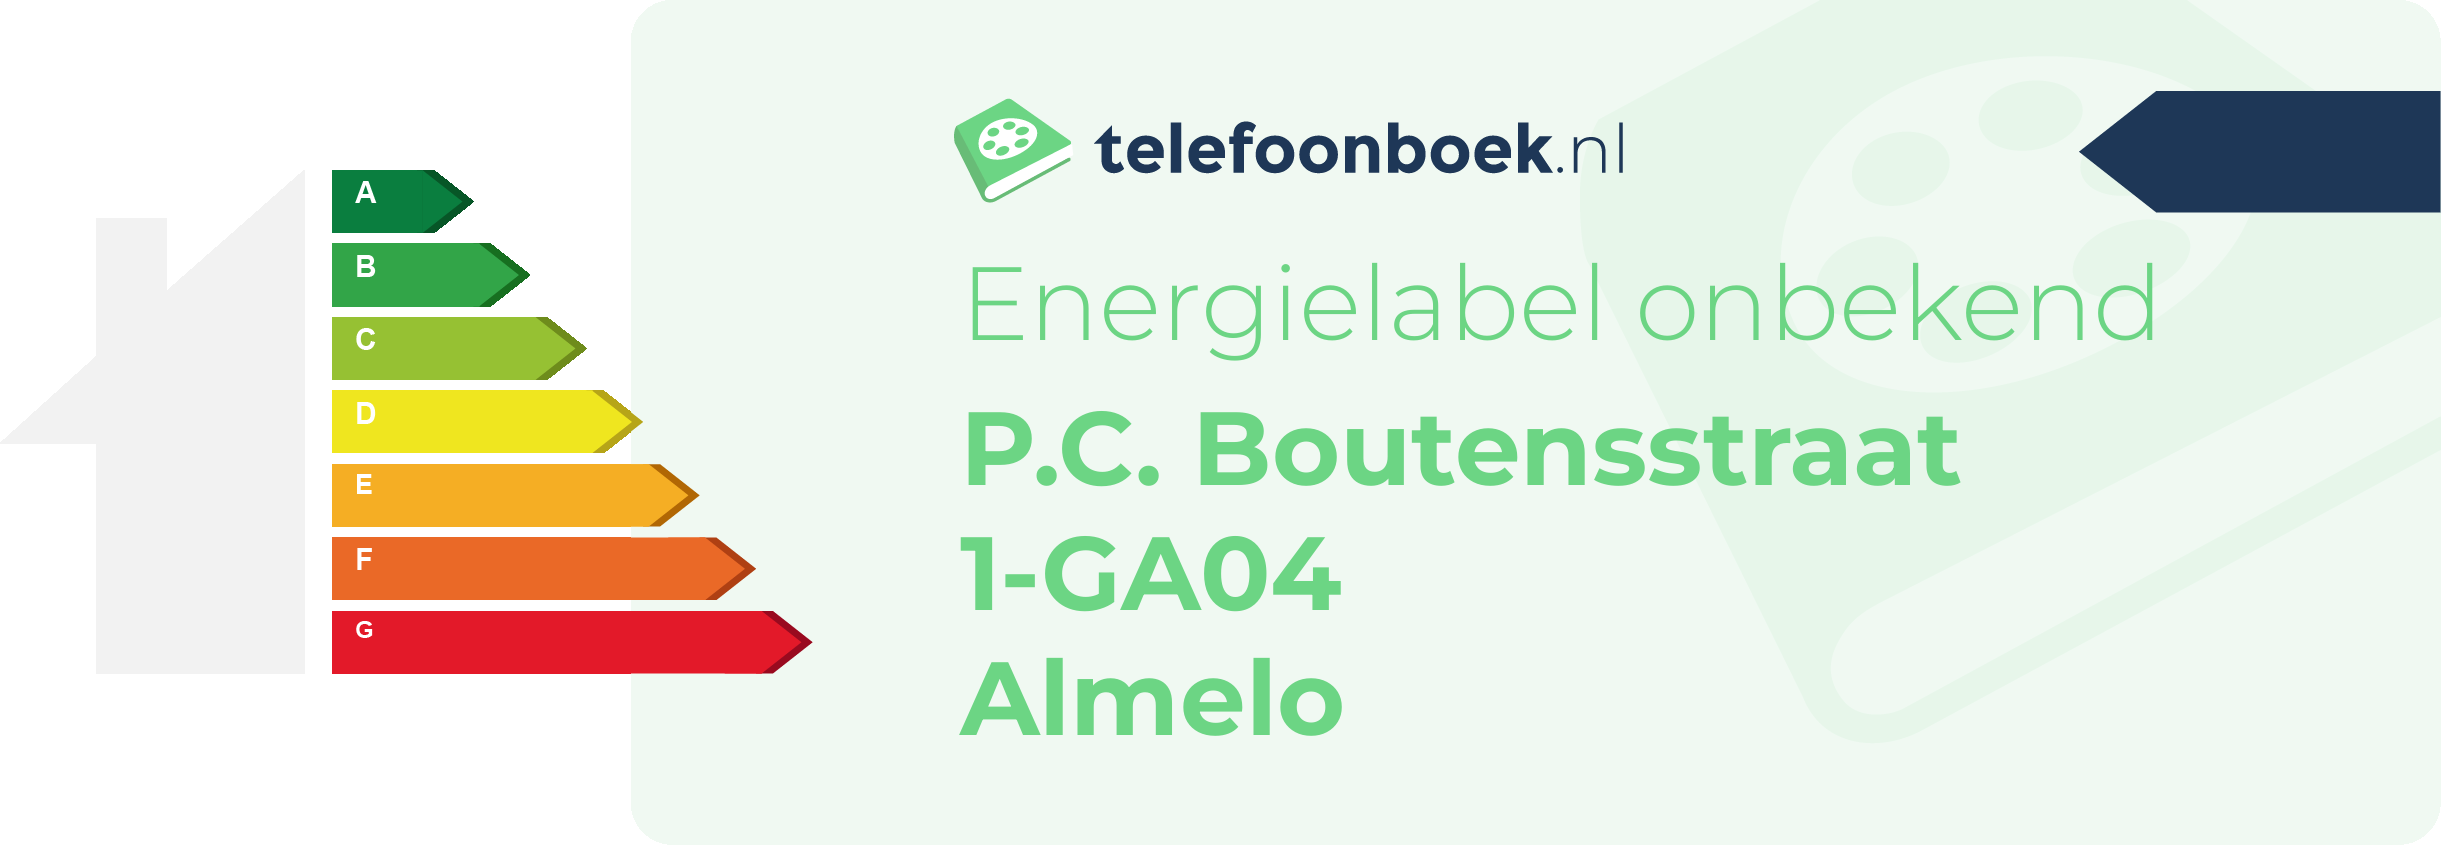 Energielabel P.C. Boutensstraat 1-GA04 Almelo